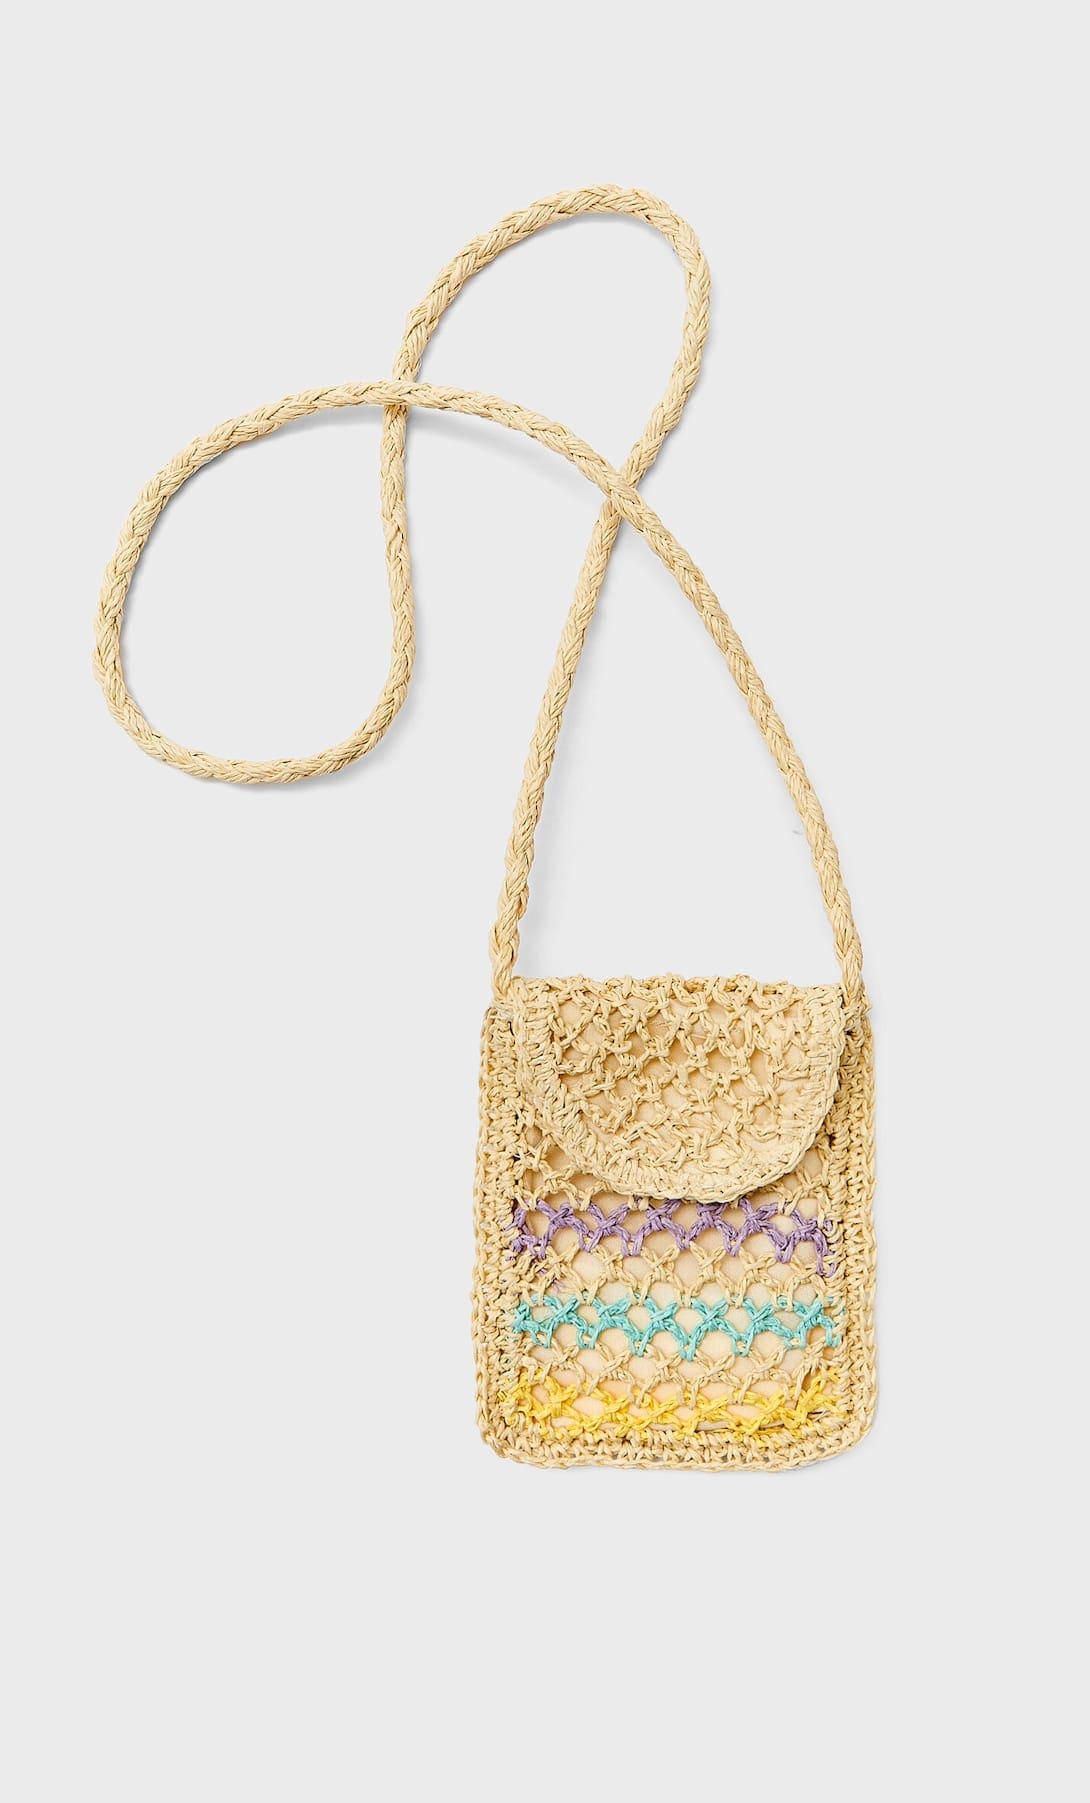 Fotos: Encuentra tu bolso crochet favorito en Zara, Mango o